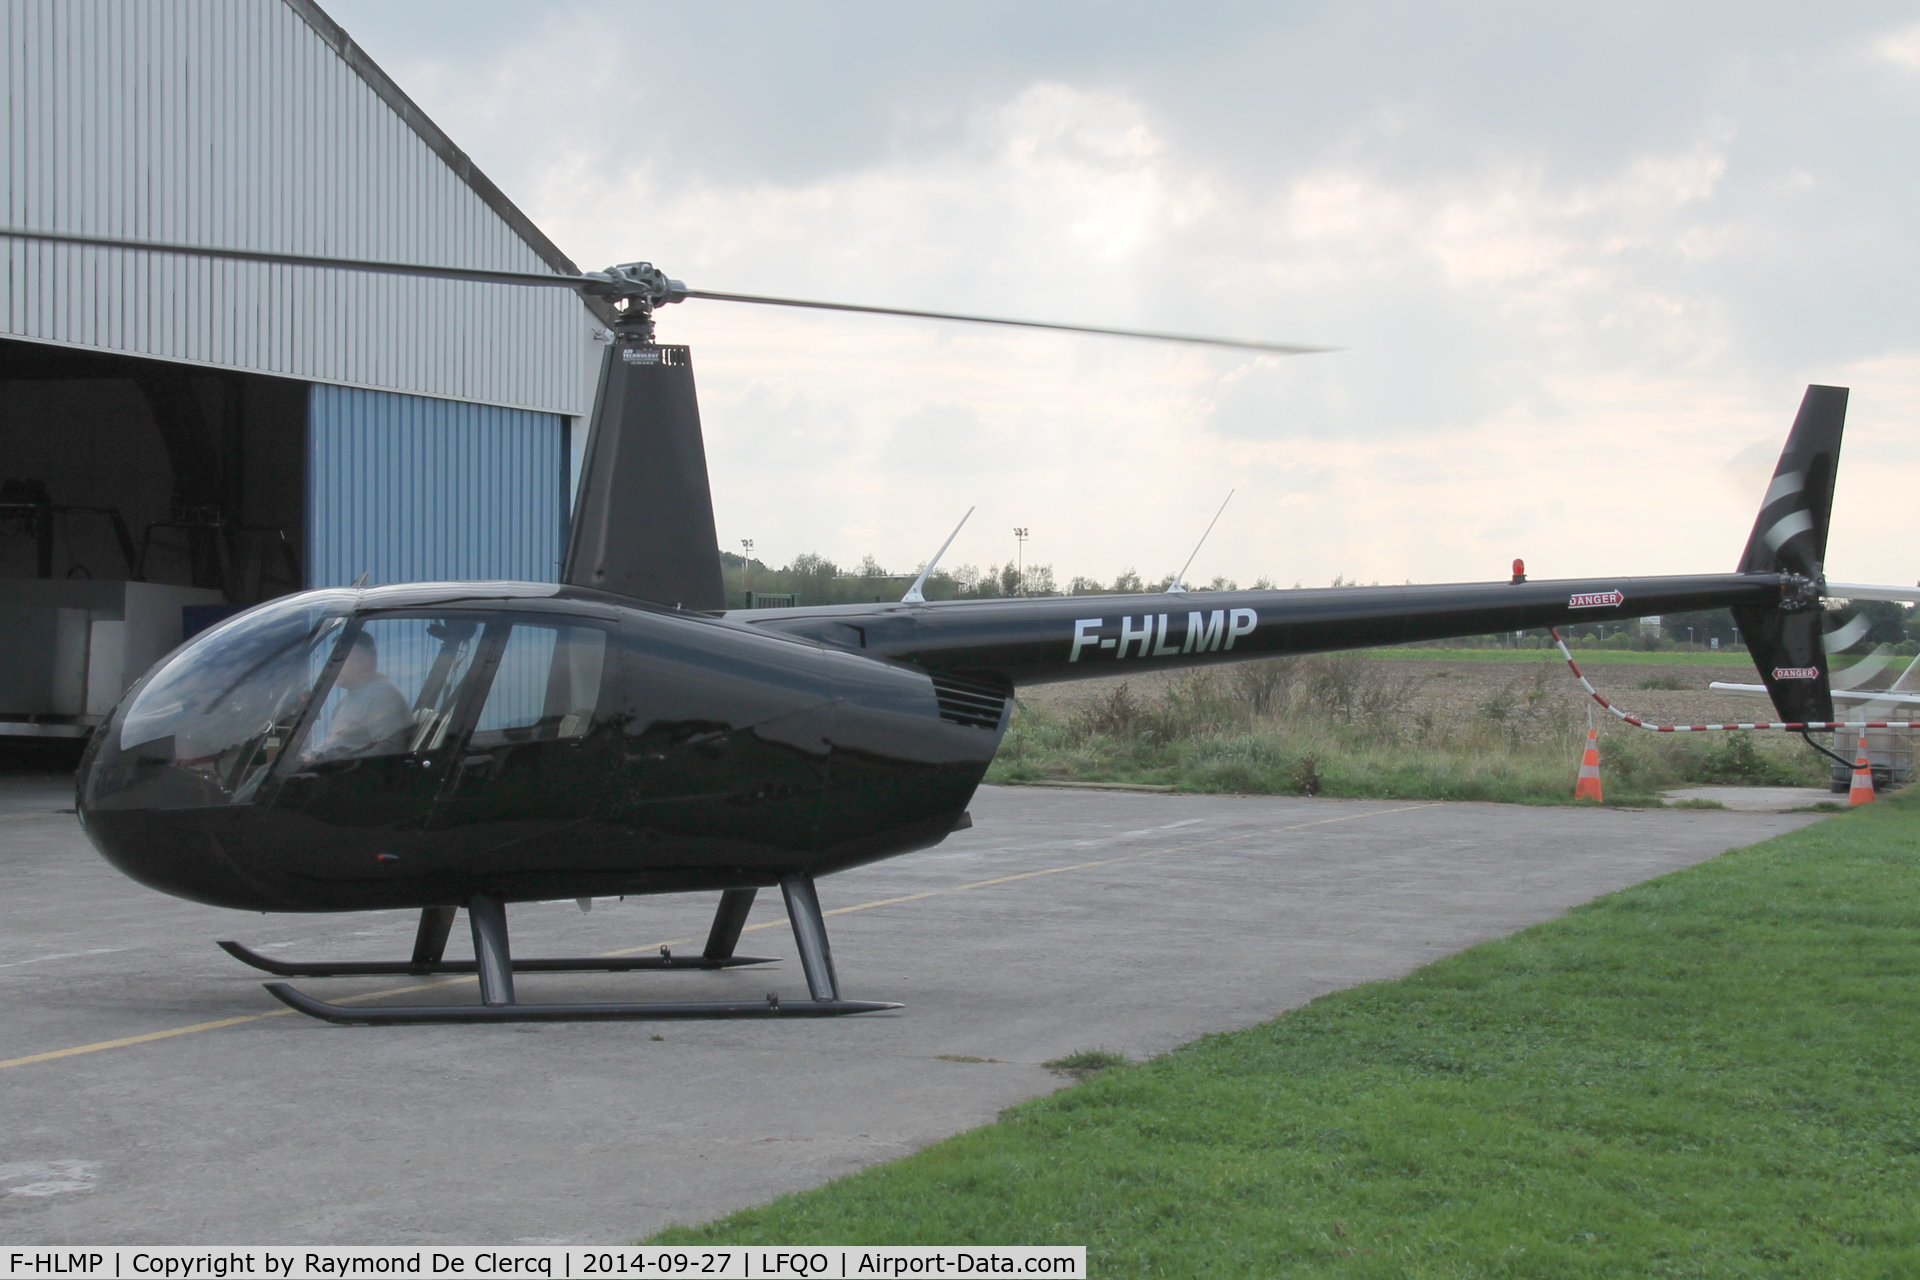 F-HLMP, 2007 Robinson R44 C/N 1750, At Bondues on 27-9-2014.